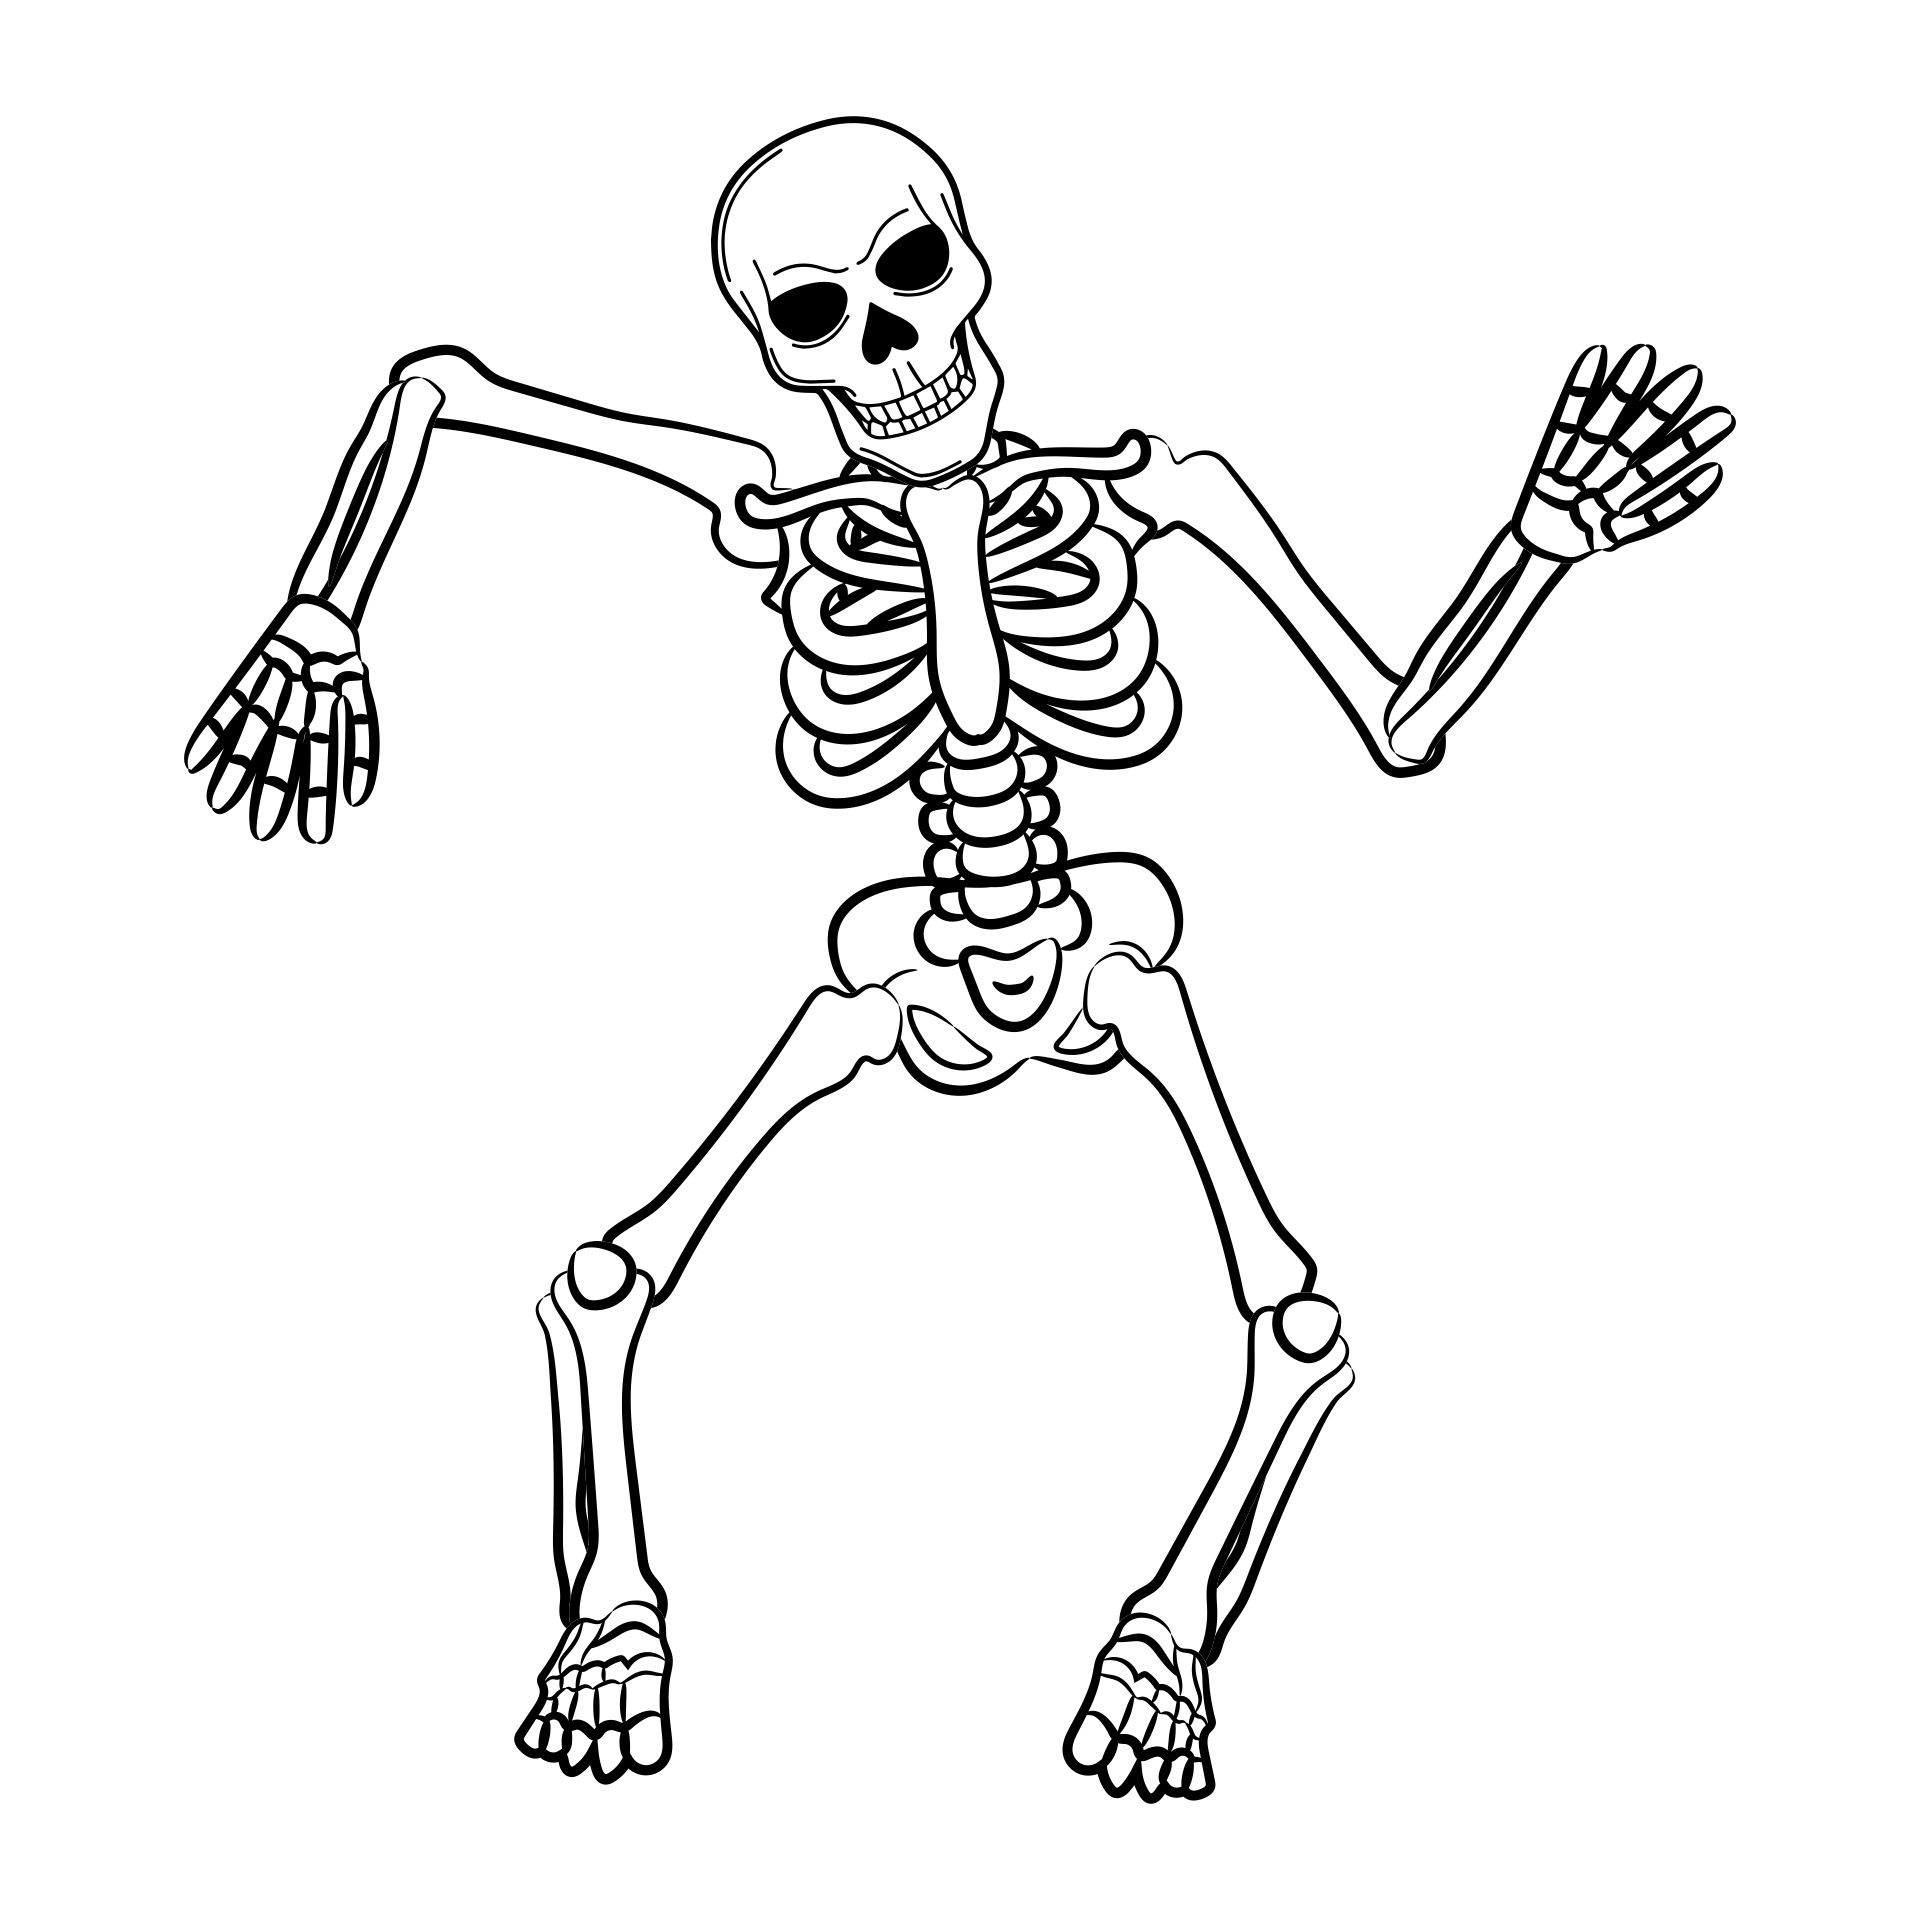 Printable Outline Of A Skeleton